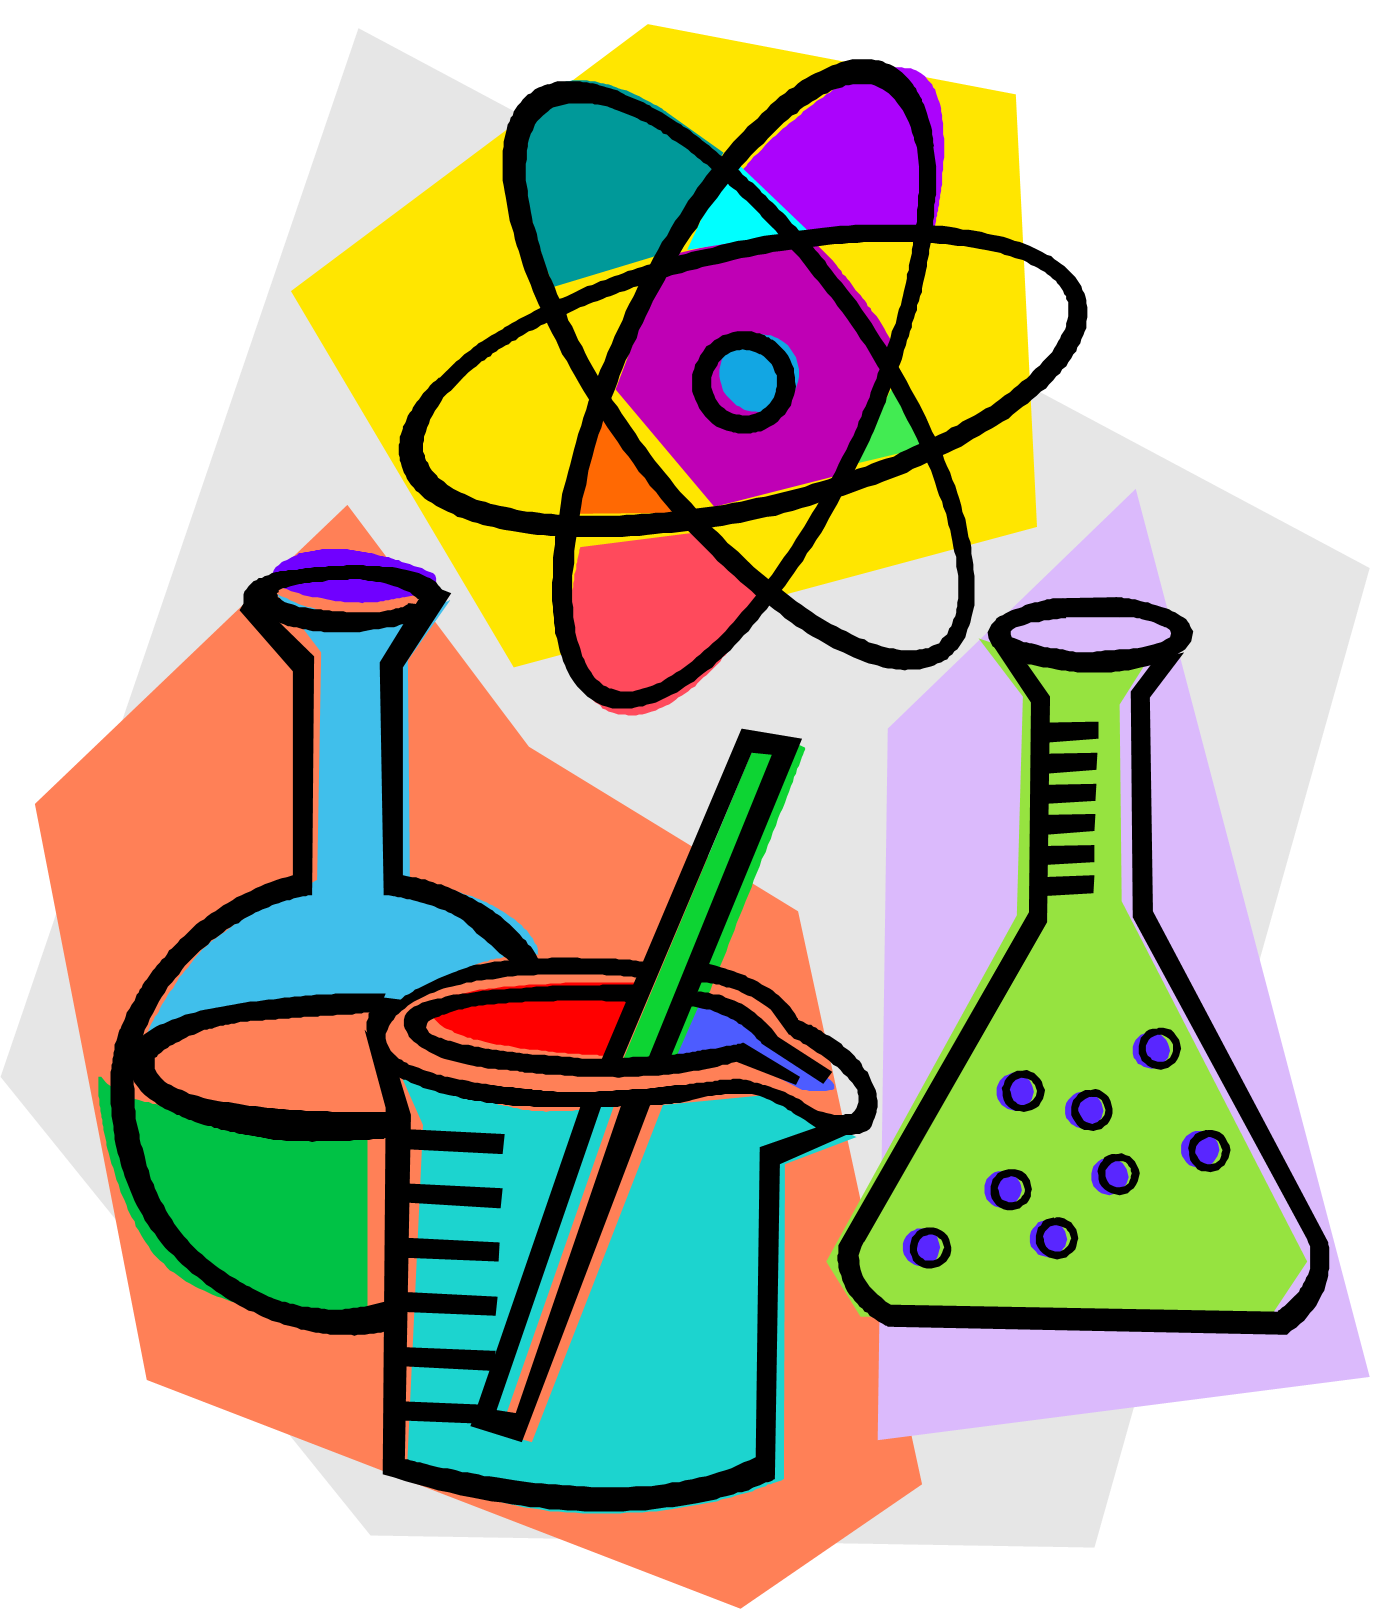 Предмет химии 1 урок. Химия. Предмет эксперимента. Химия рисунки. Символ химии.